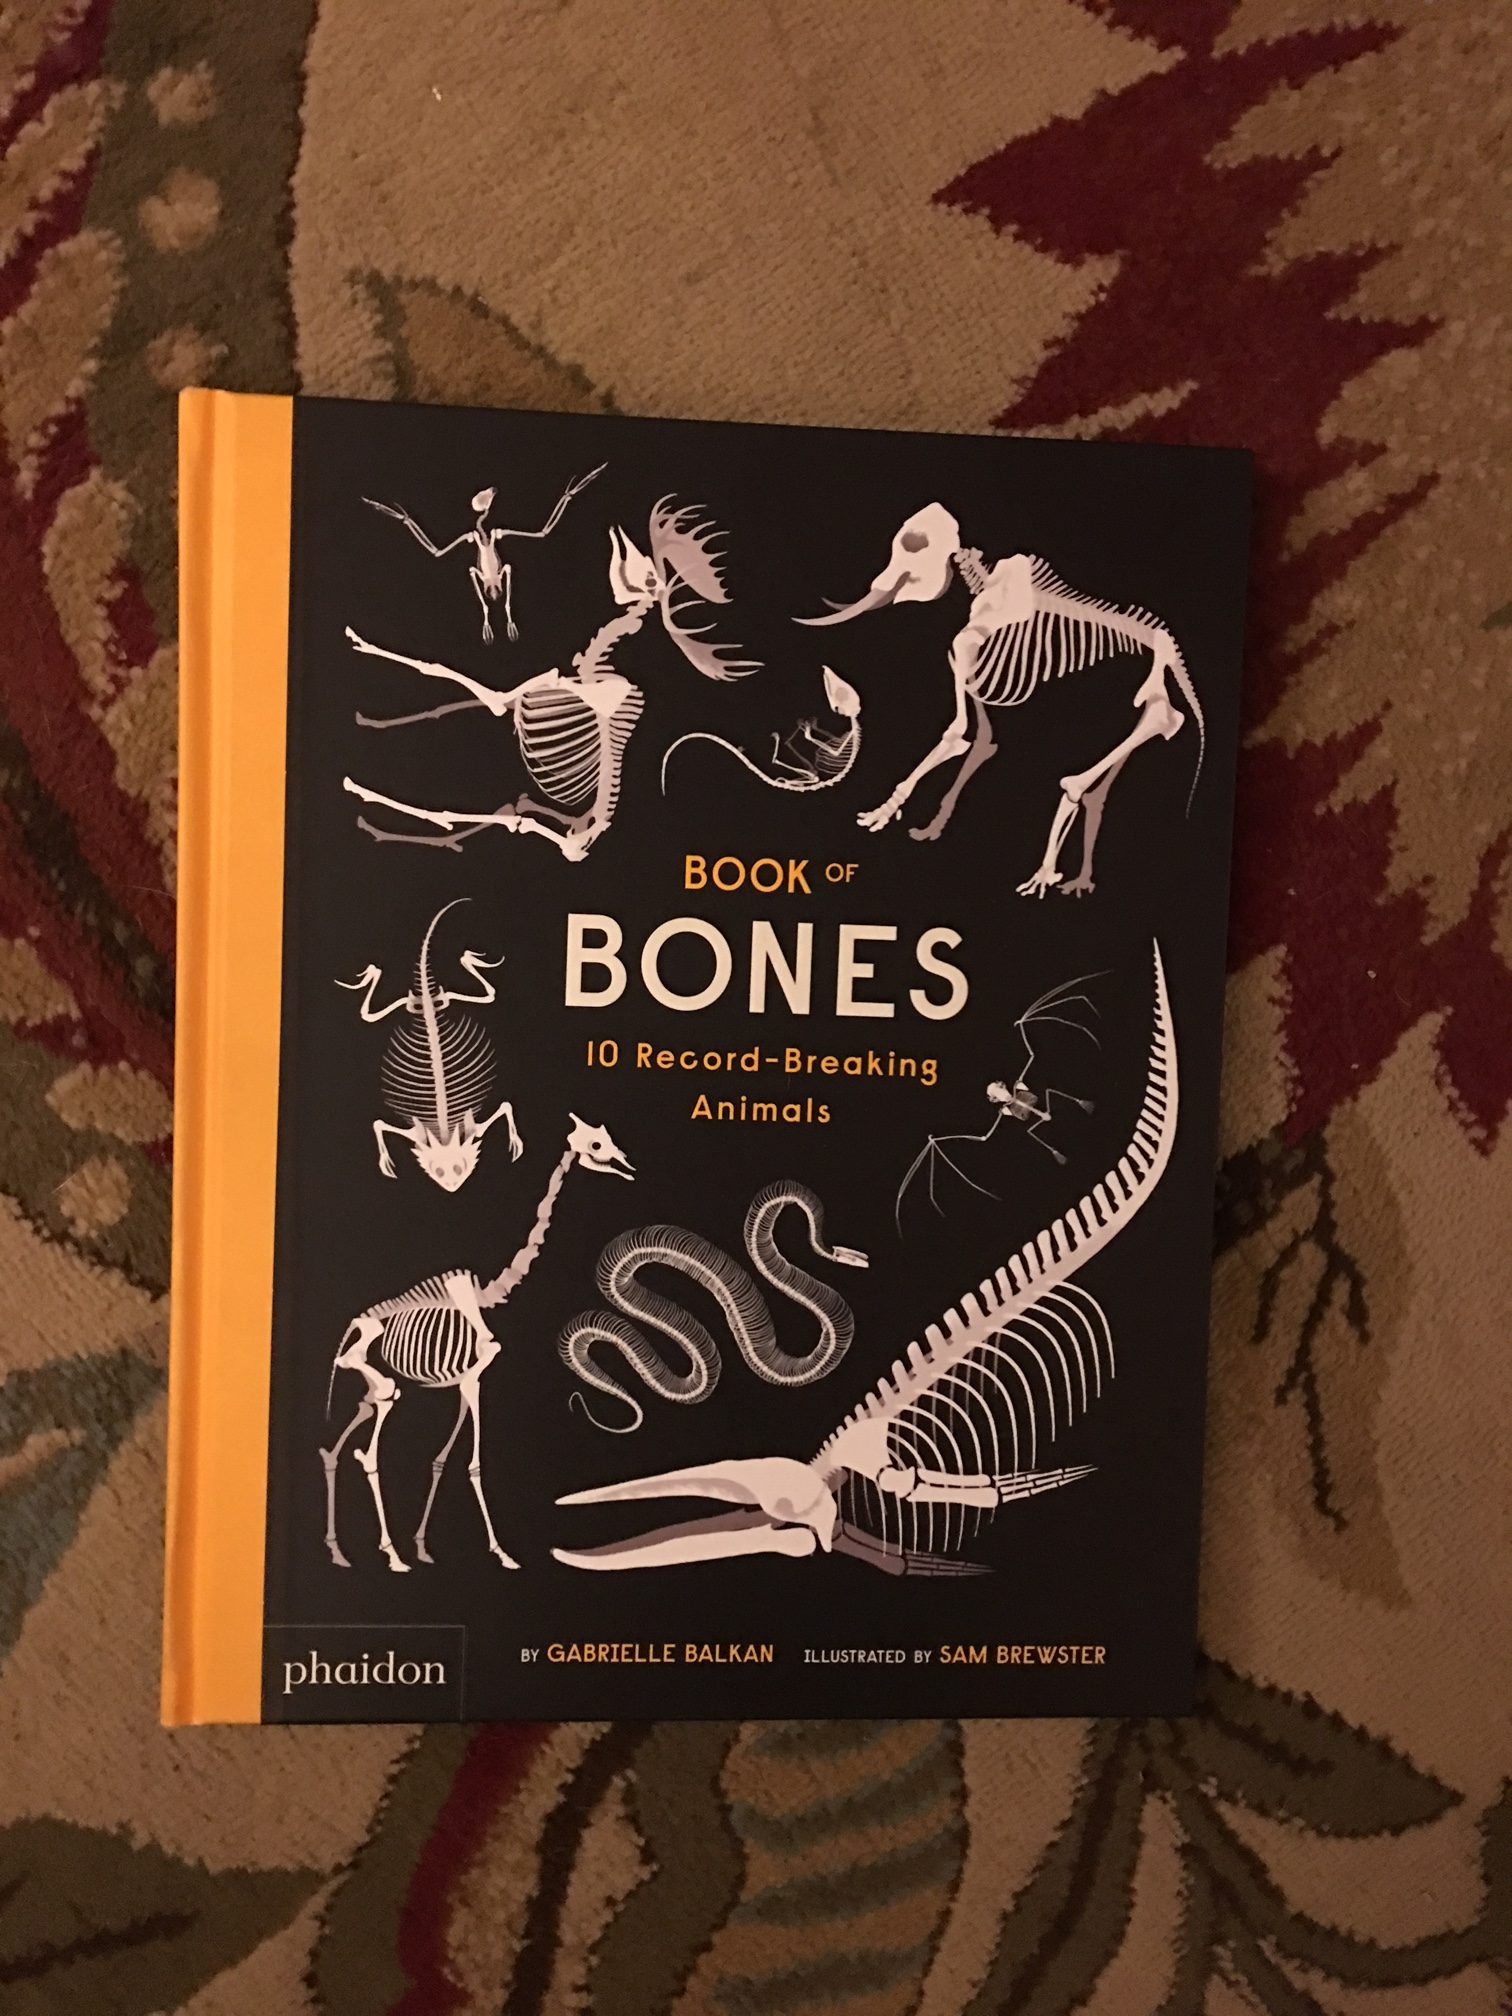 Book of bones by Gabrielle Balkan.